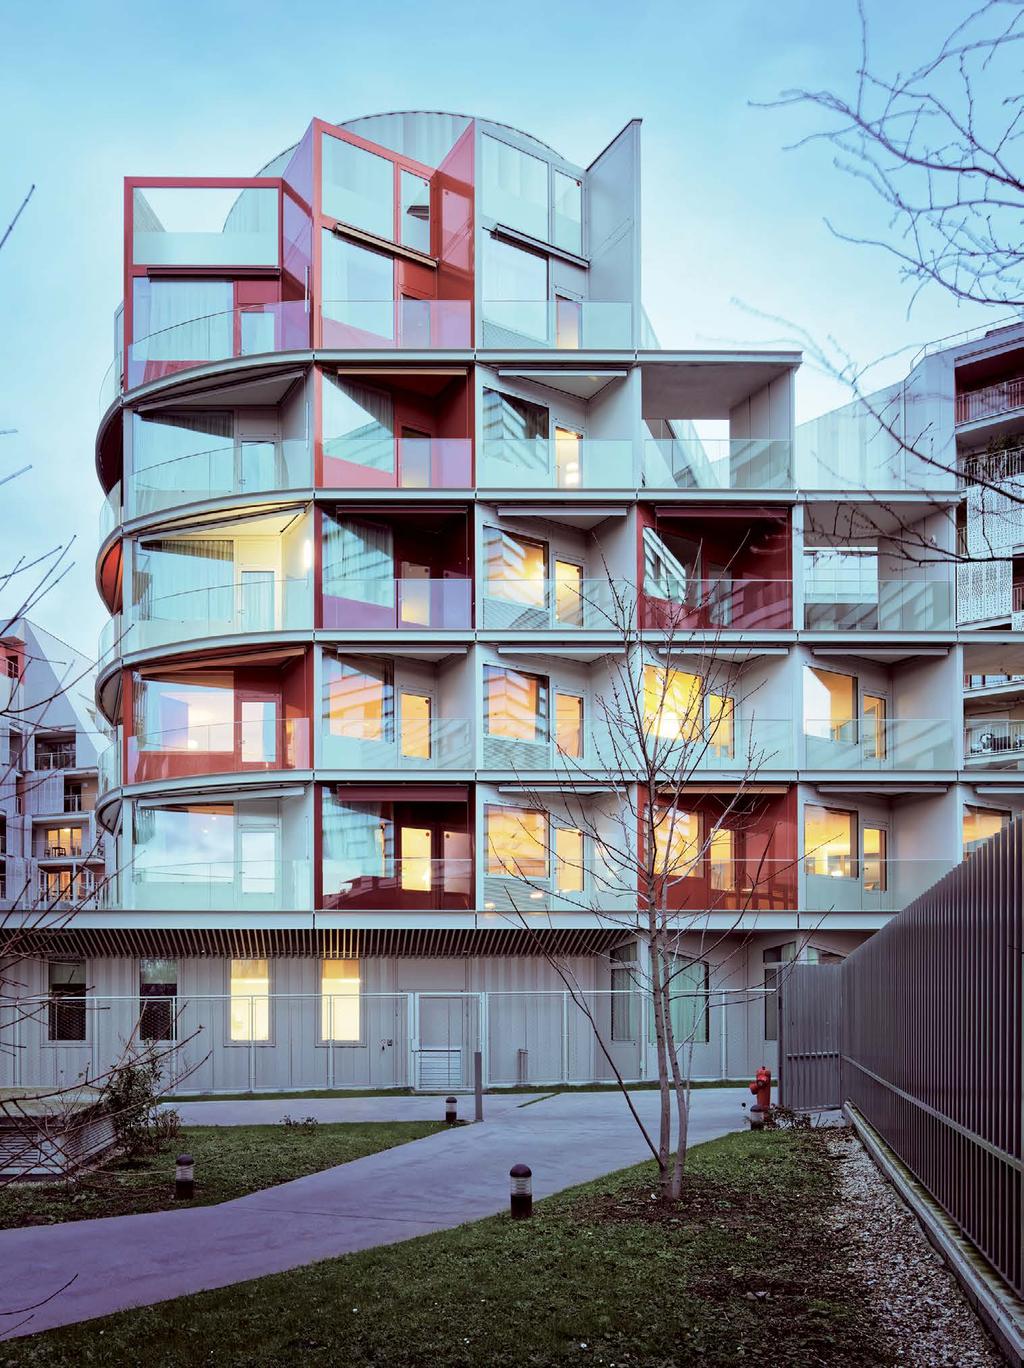 Batignolles 巴蒂諾爾 城市中的療養綜合體 同樣位在巴黎 由建築團隊Atelier Du Pont打造的療養院 Nursing Home 在巴蒂諾爾 Batignolles